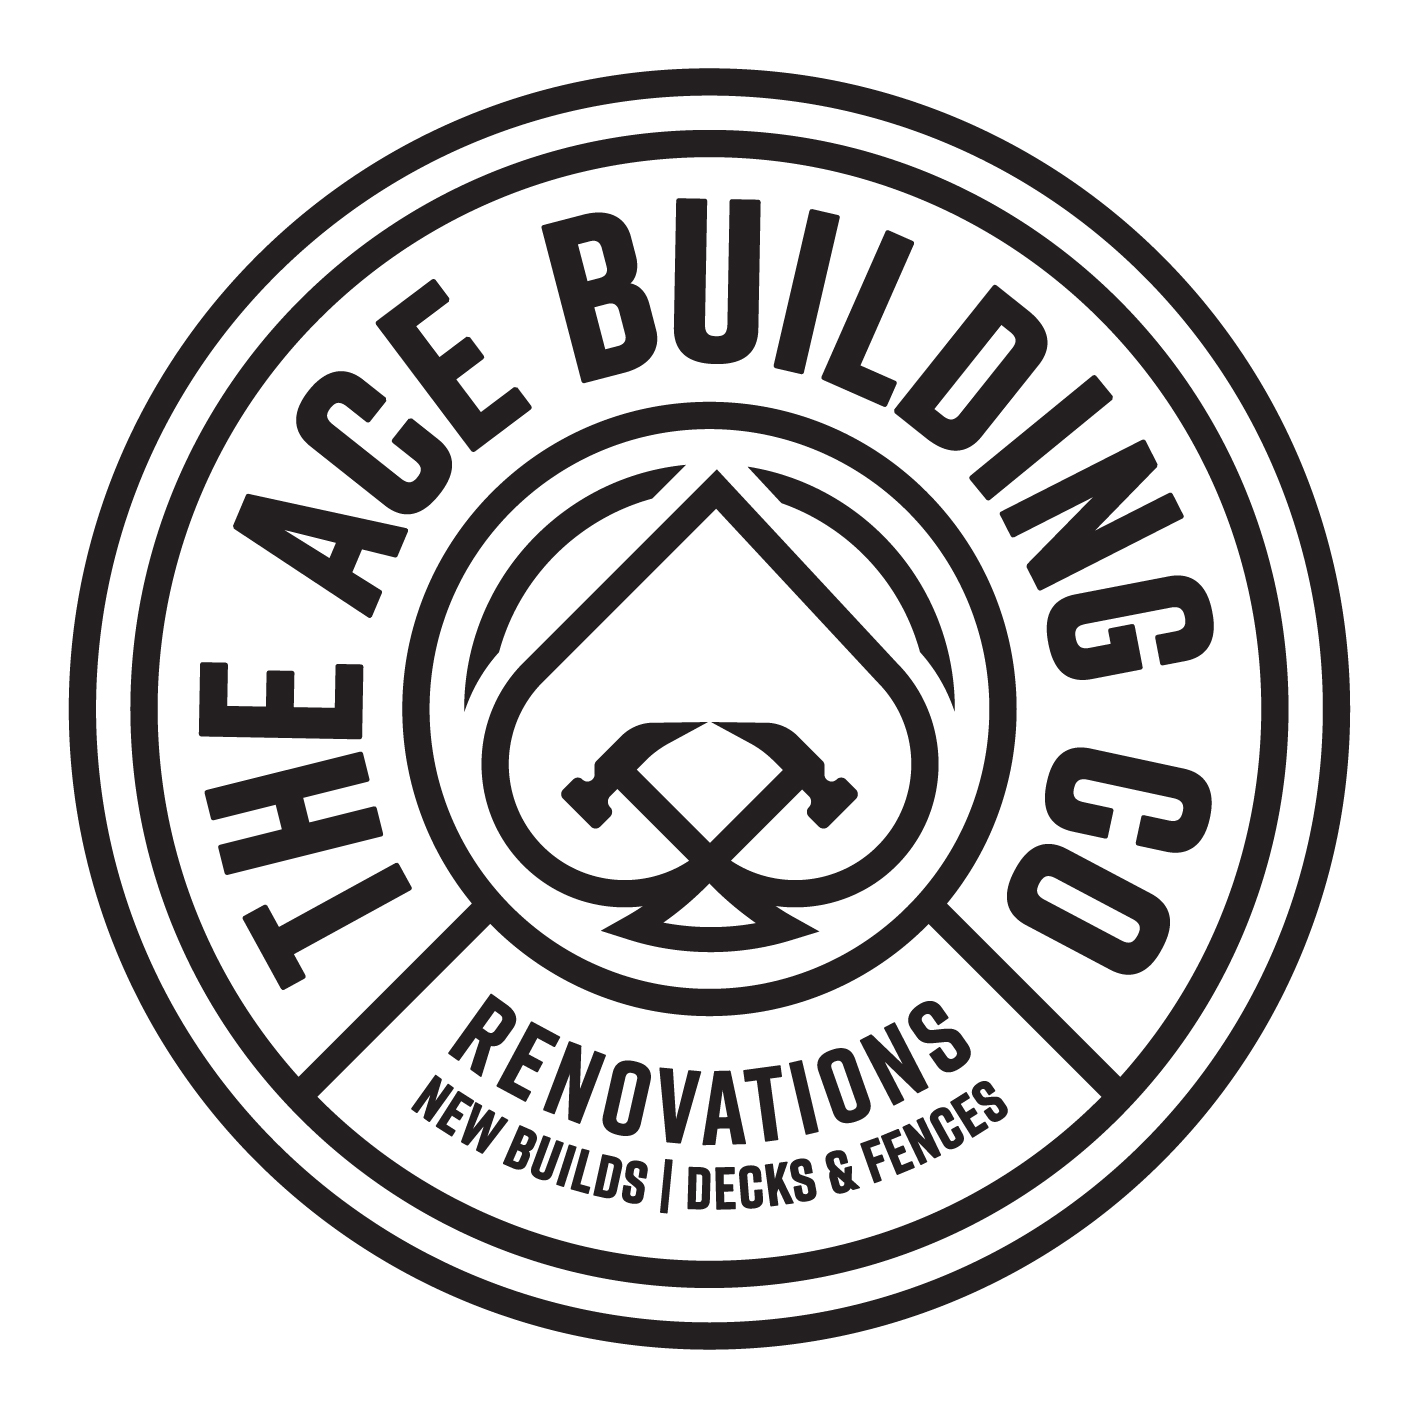 The Ace Building Co logo